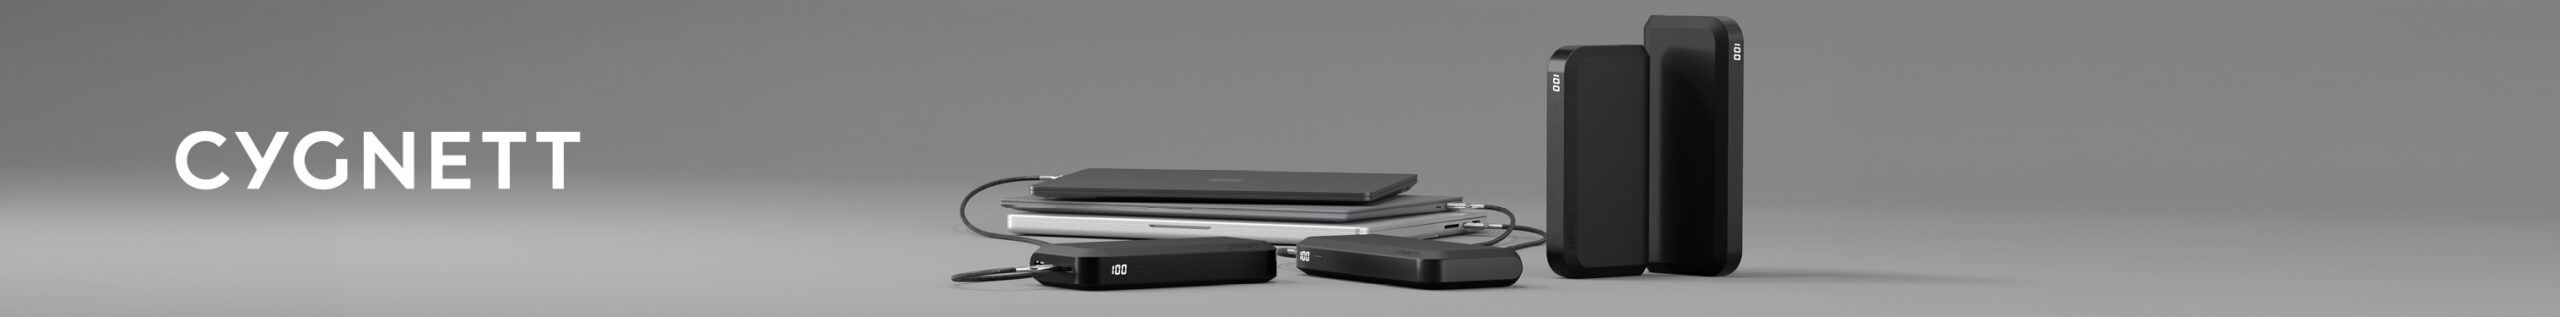 4SquareMedia 728x90 scaled Mobile Pixels Launches Portable Laptop Monitors In Australia